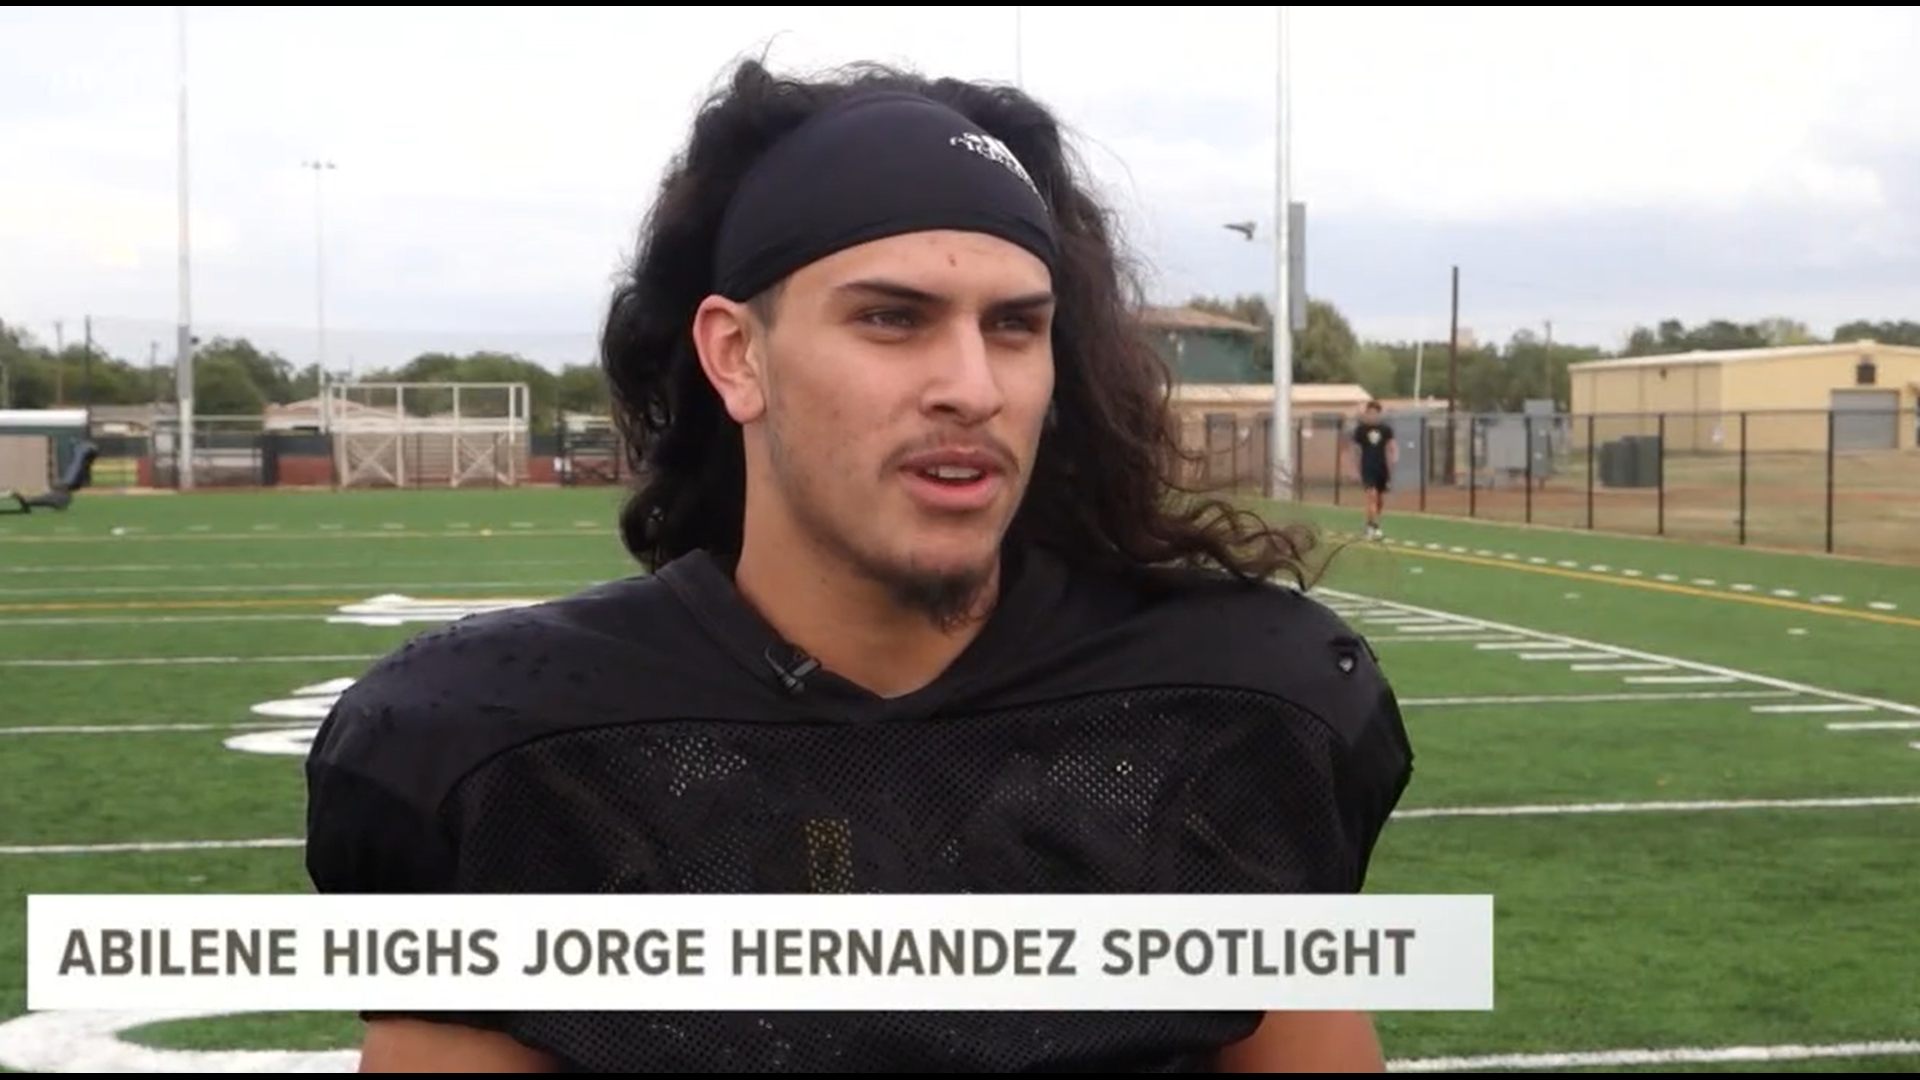 Abilene Highs Jorge Hernandez is impacting his peers off the field as much as he is on the field.